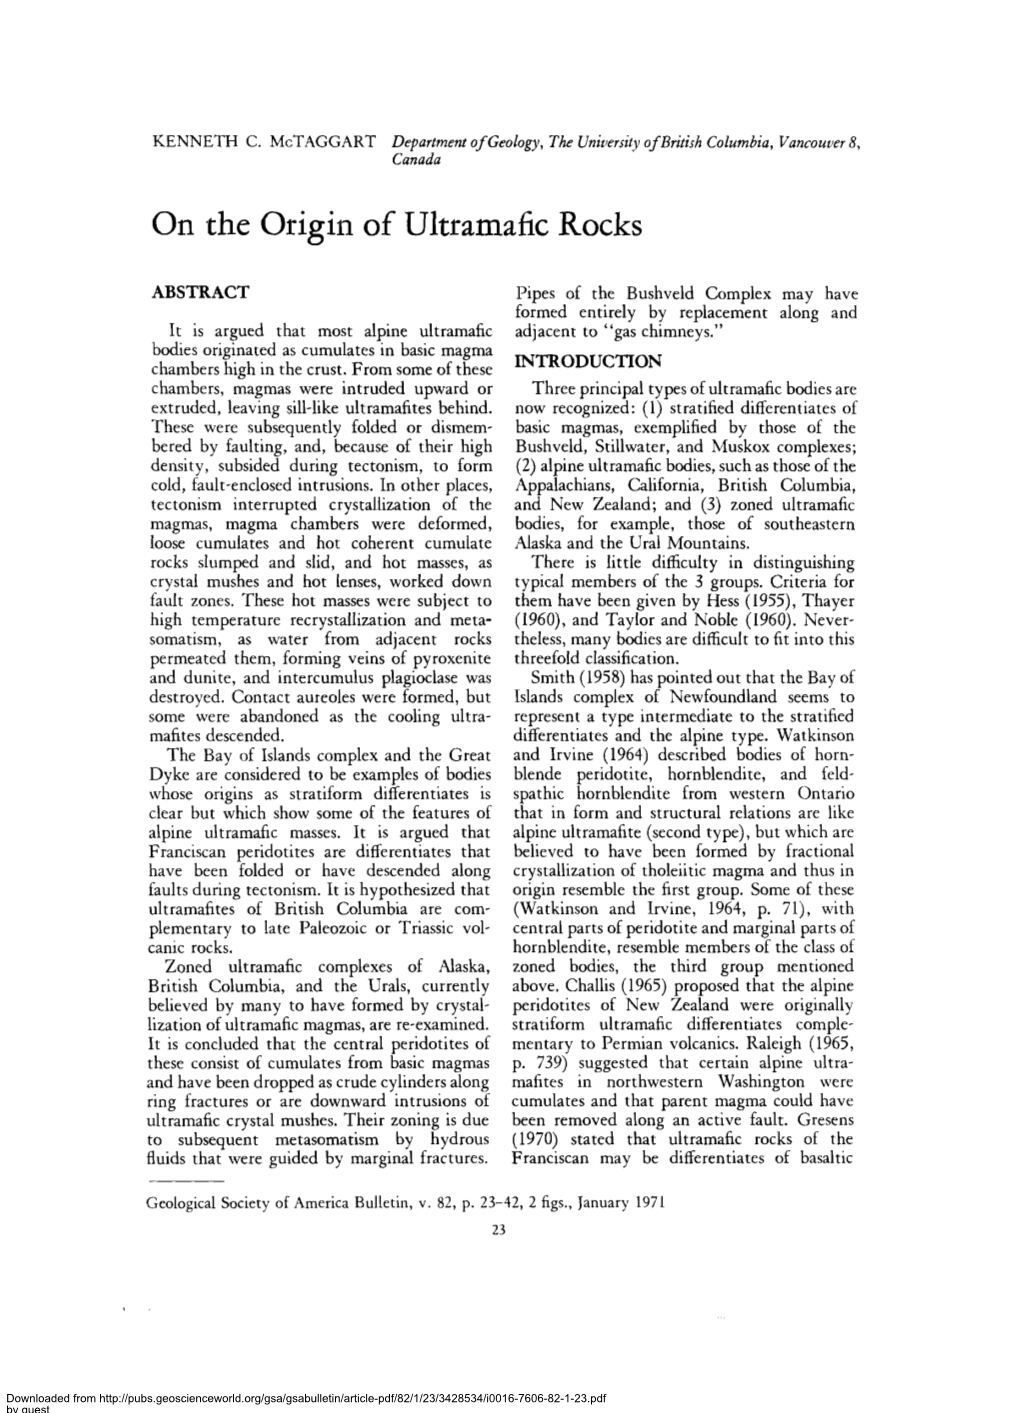 On the Origin of Ultramafic Rocks